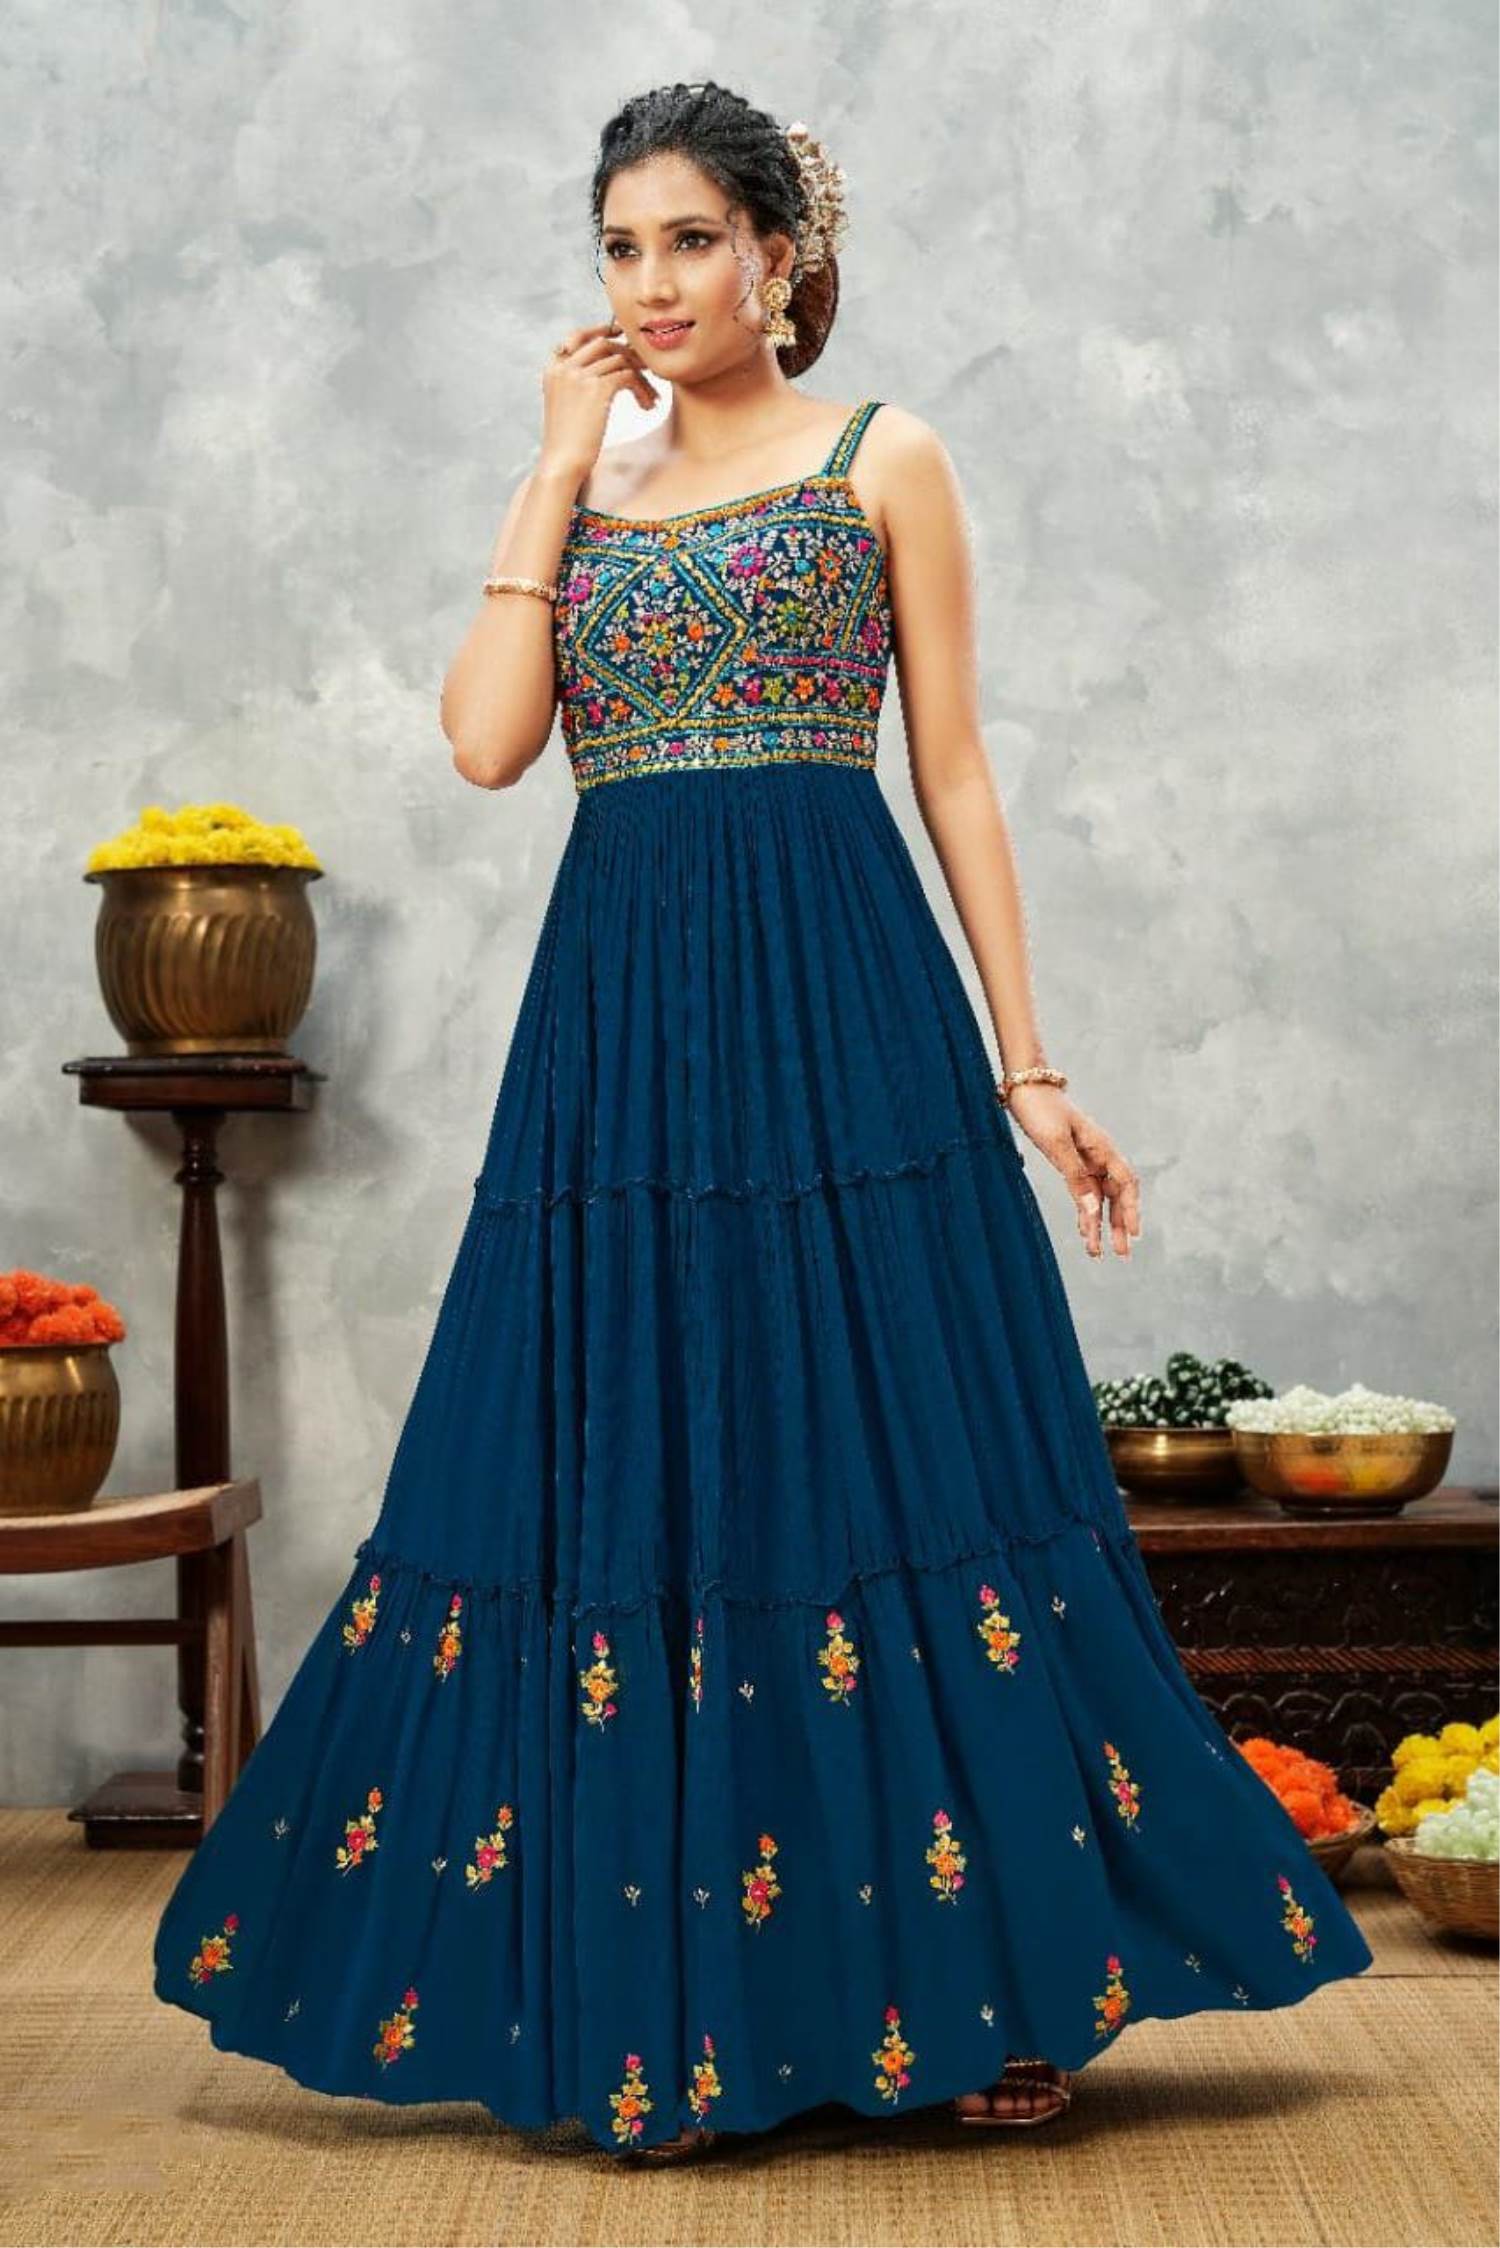 Buy Peacock Blue Solid Dress Online - Ritu Kumar International Store View